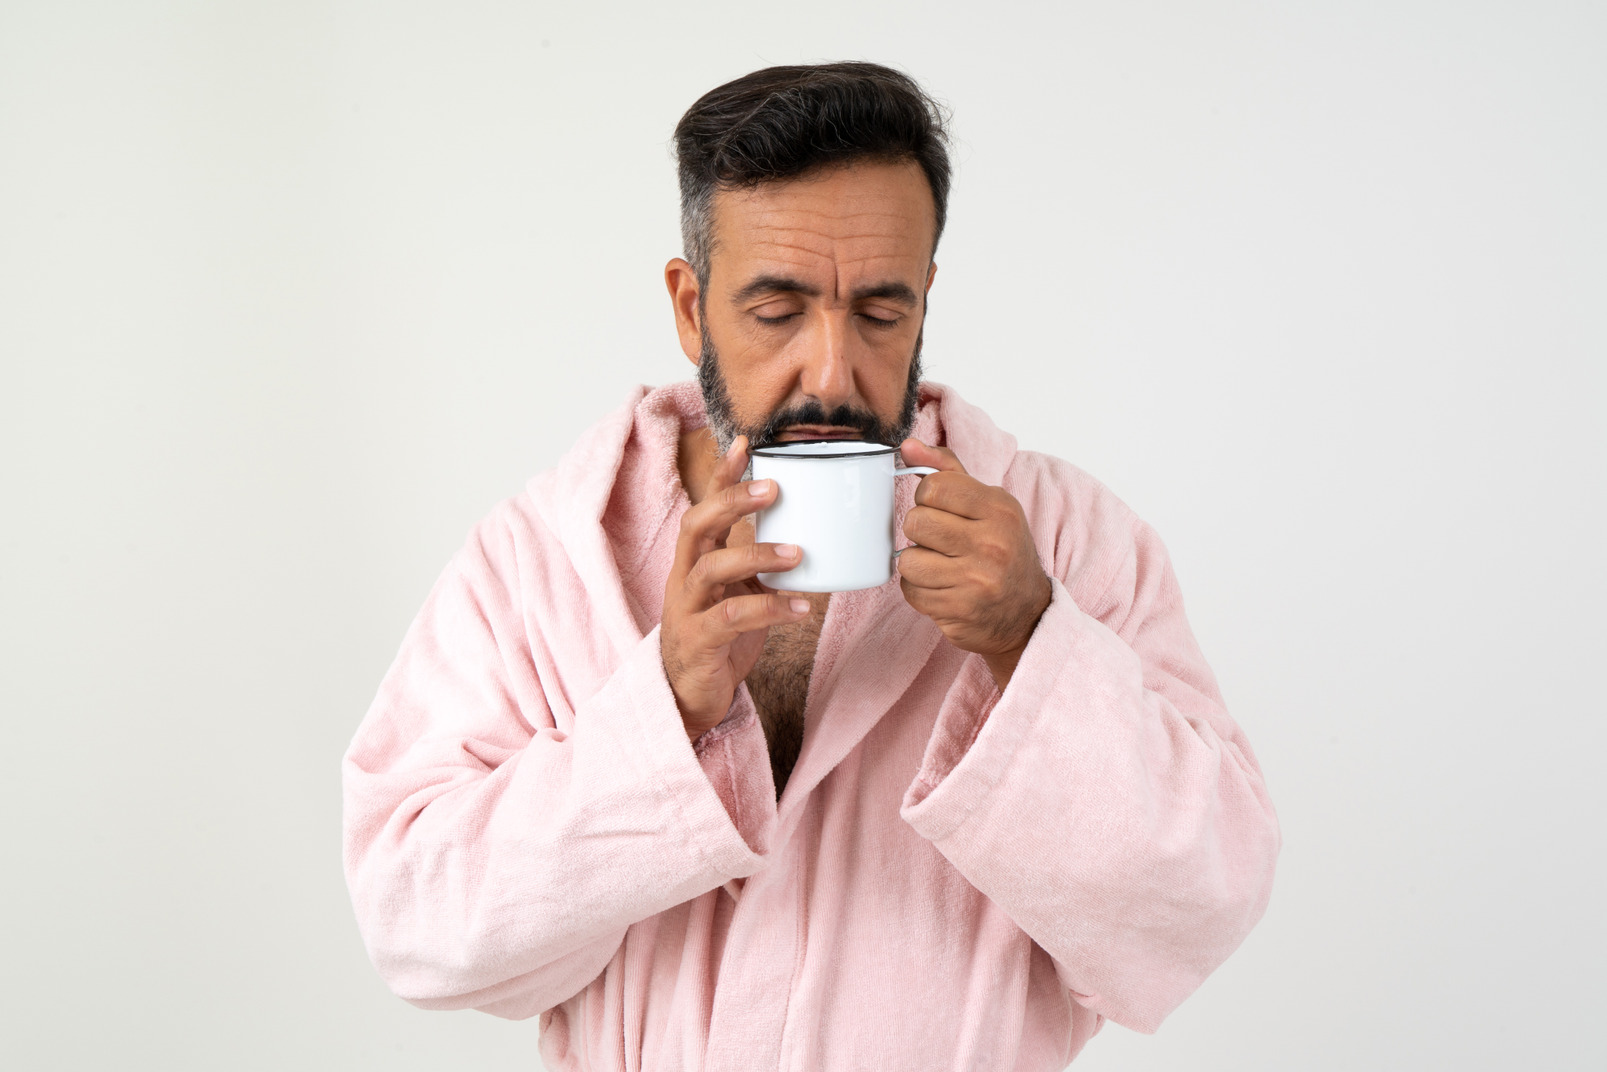 Mature man drinking a coffee